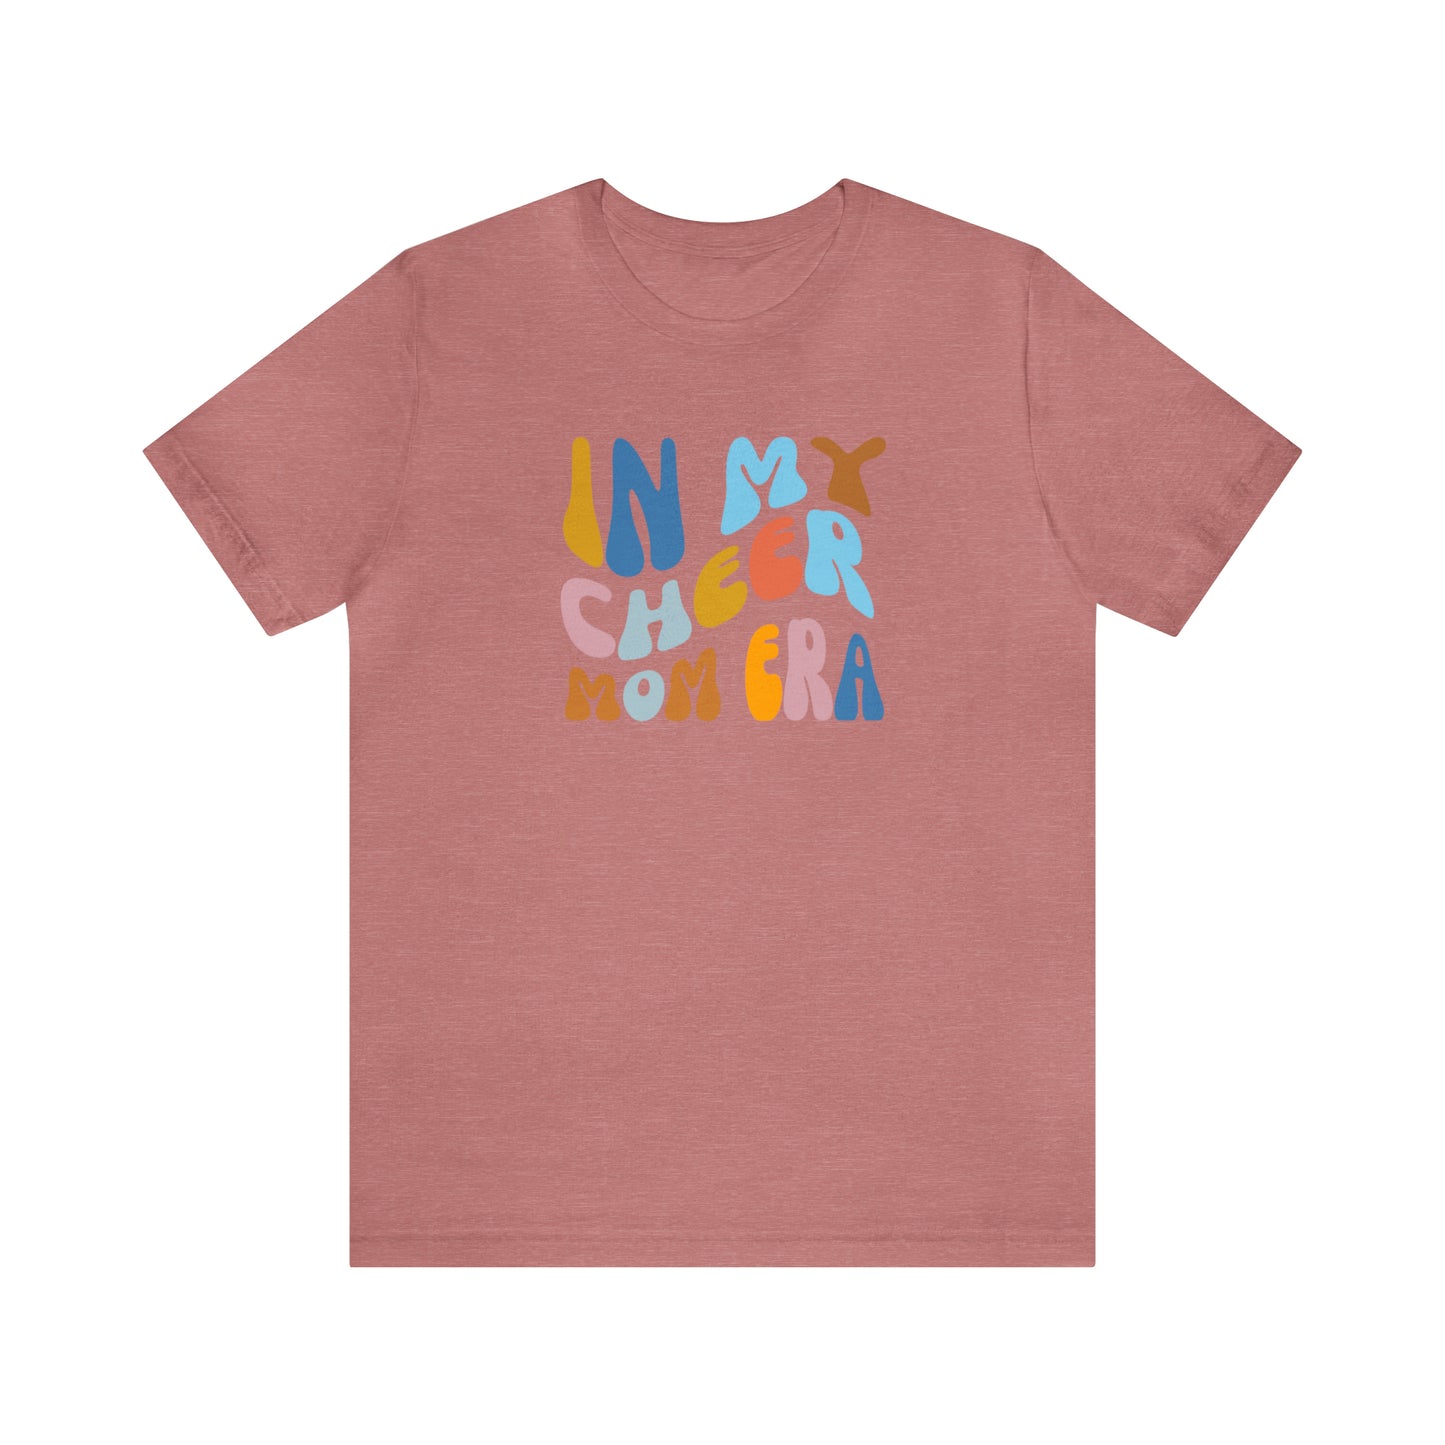 Cheer Mom Era shirt, Best Mom Shirt, Mom Life Shirt, Stage Mom Shirt, Best Mama Shirt, T244